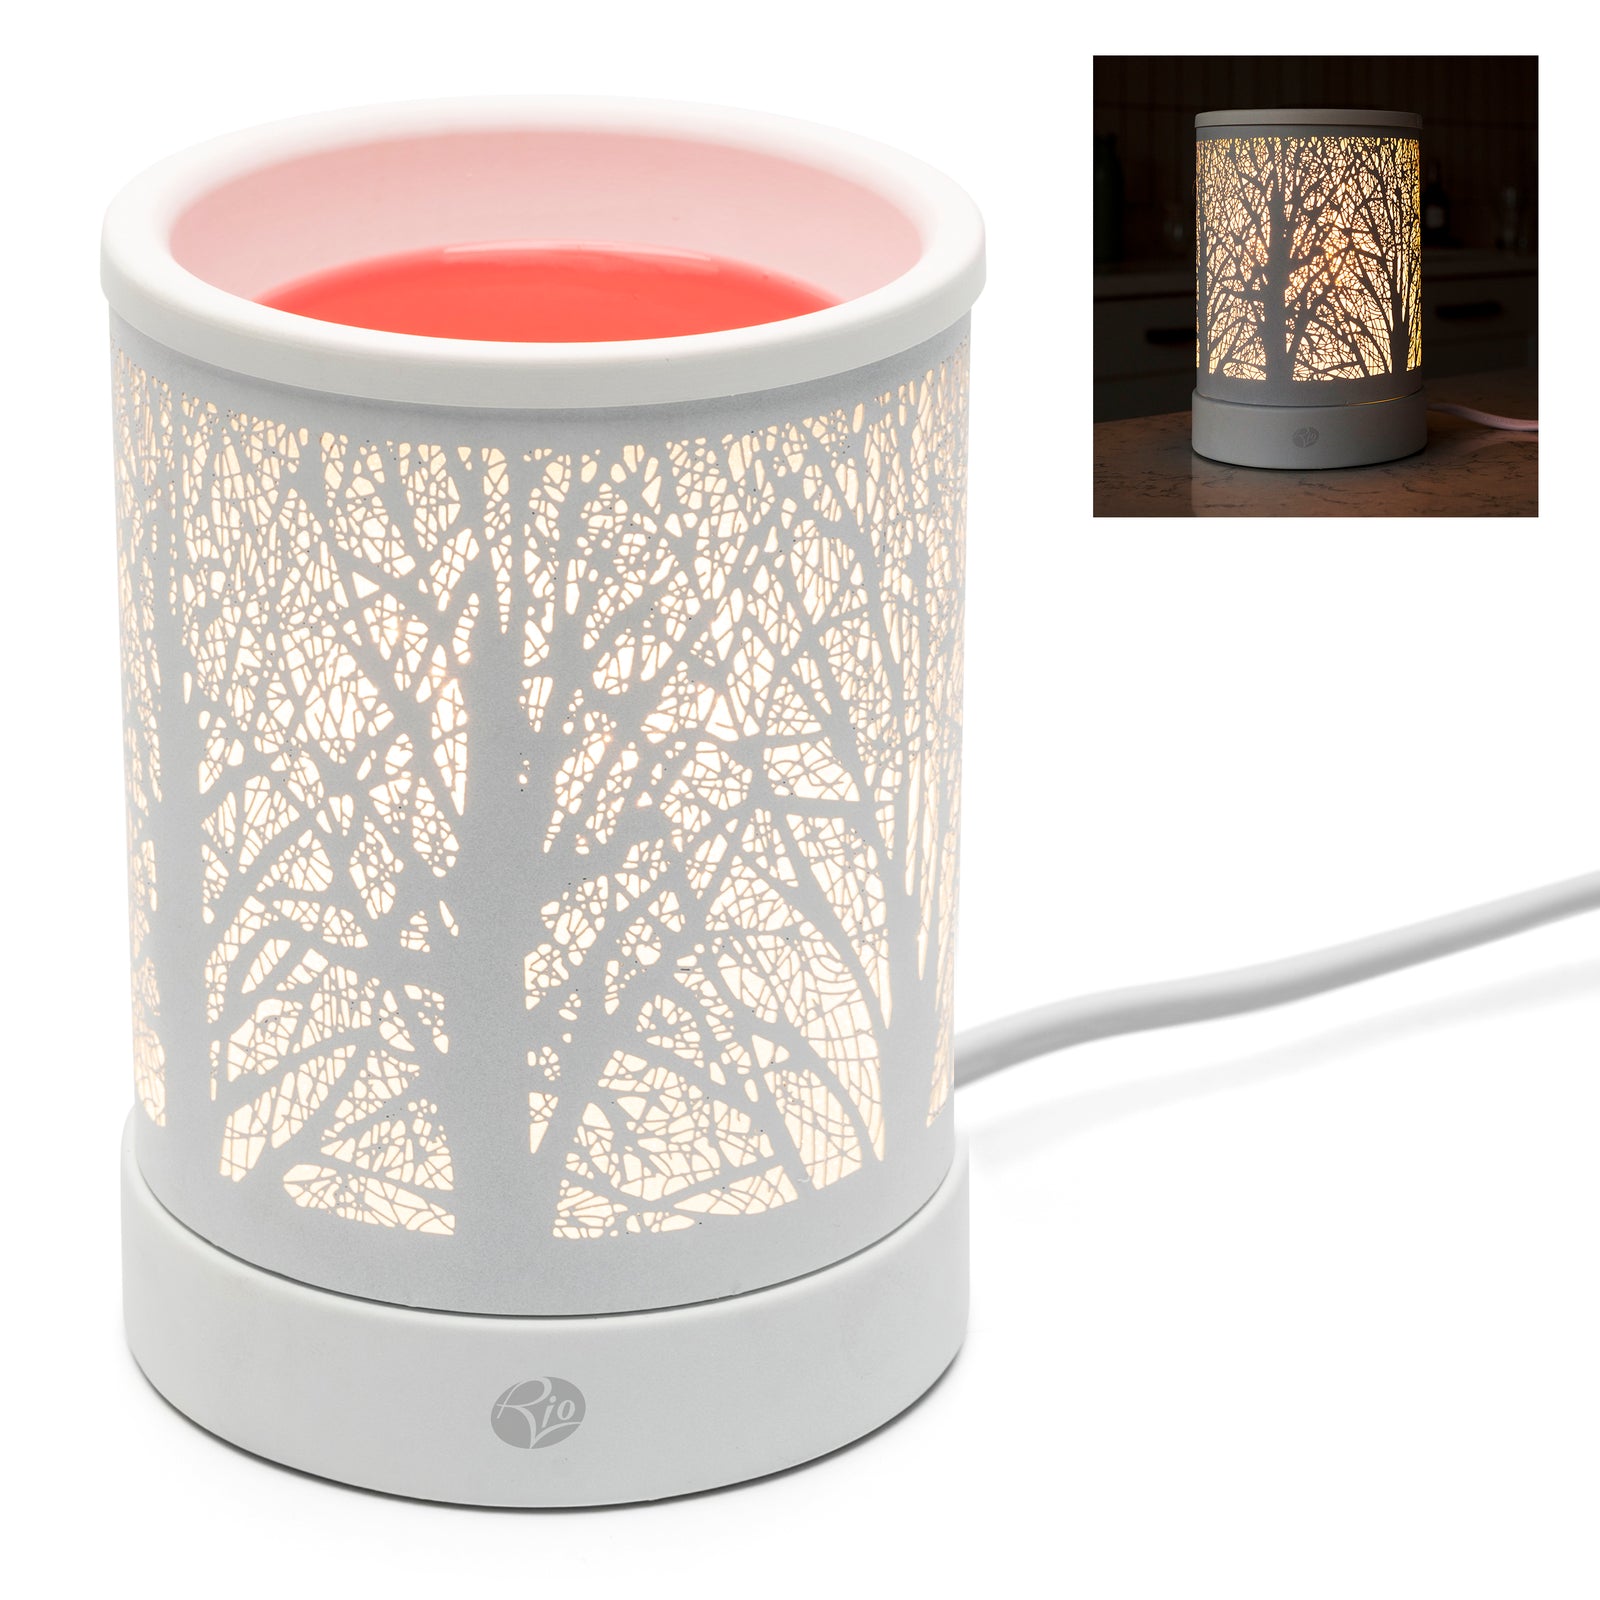 FORA Wax Melt Burner & Aroma Diffuser Lamp